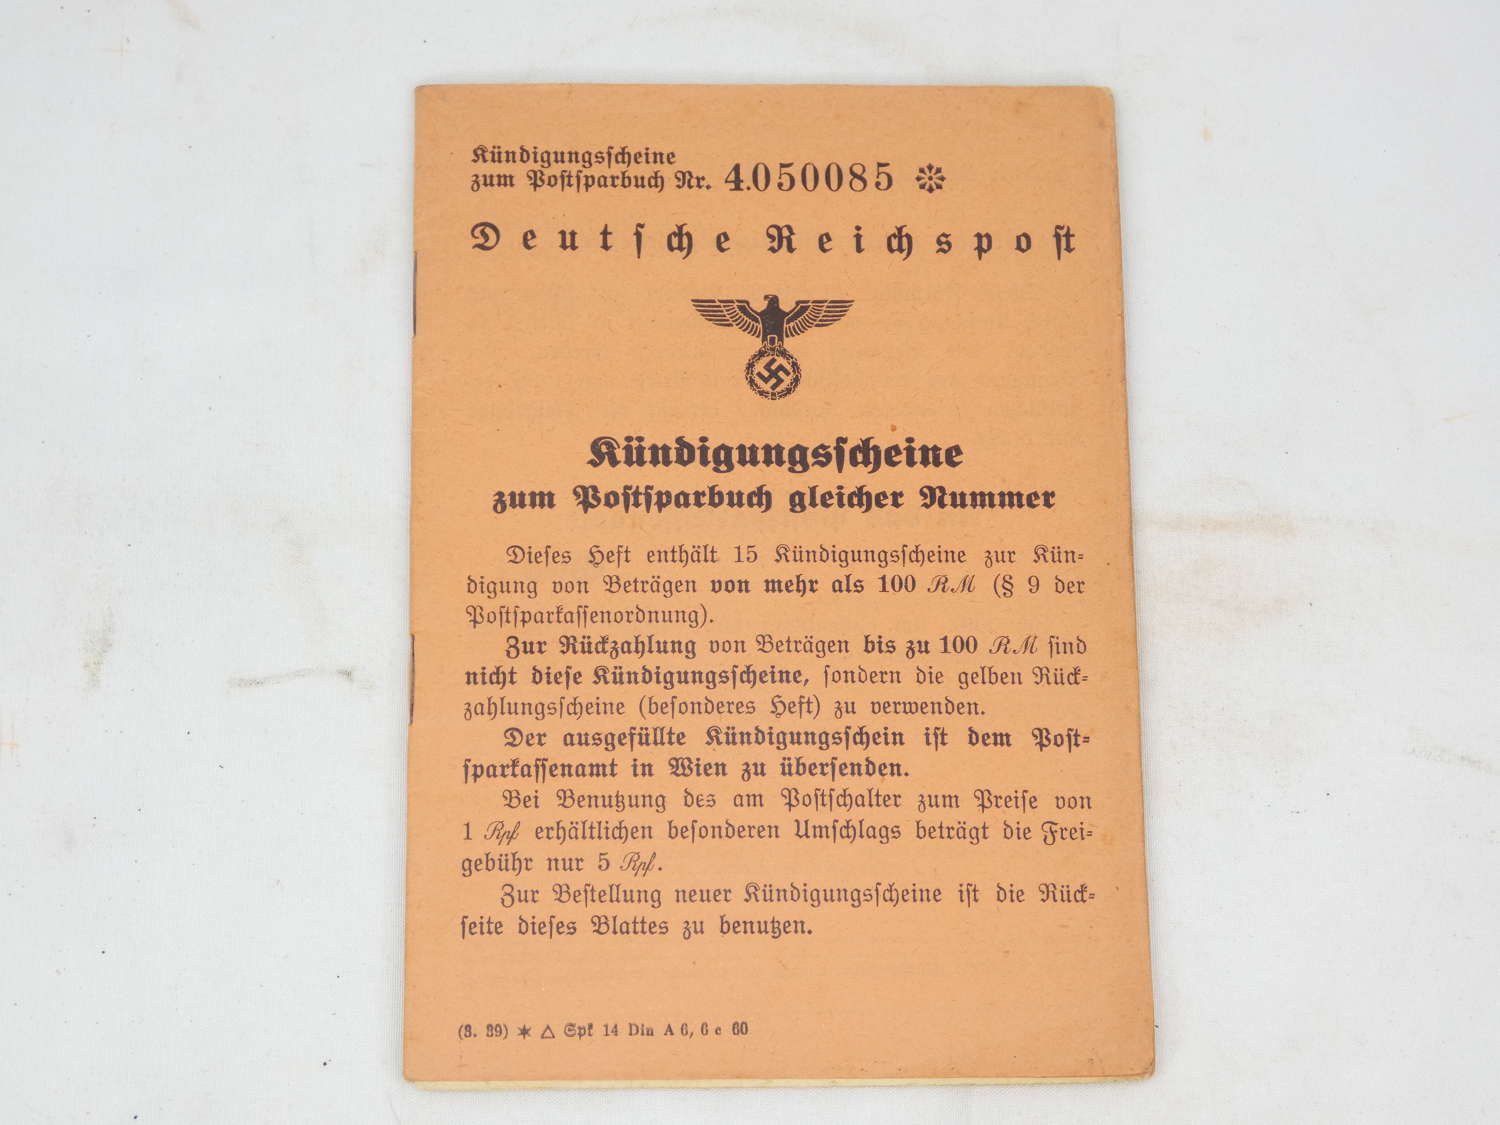 WW2 German Reichspost Postal Savings Book